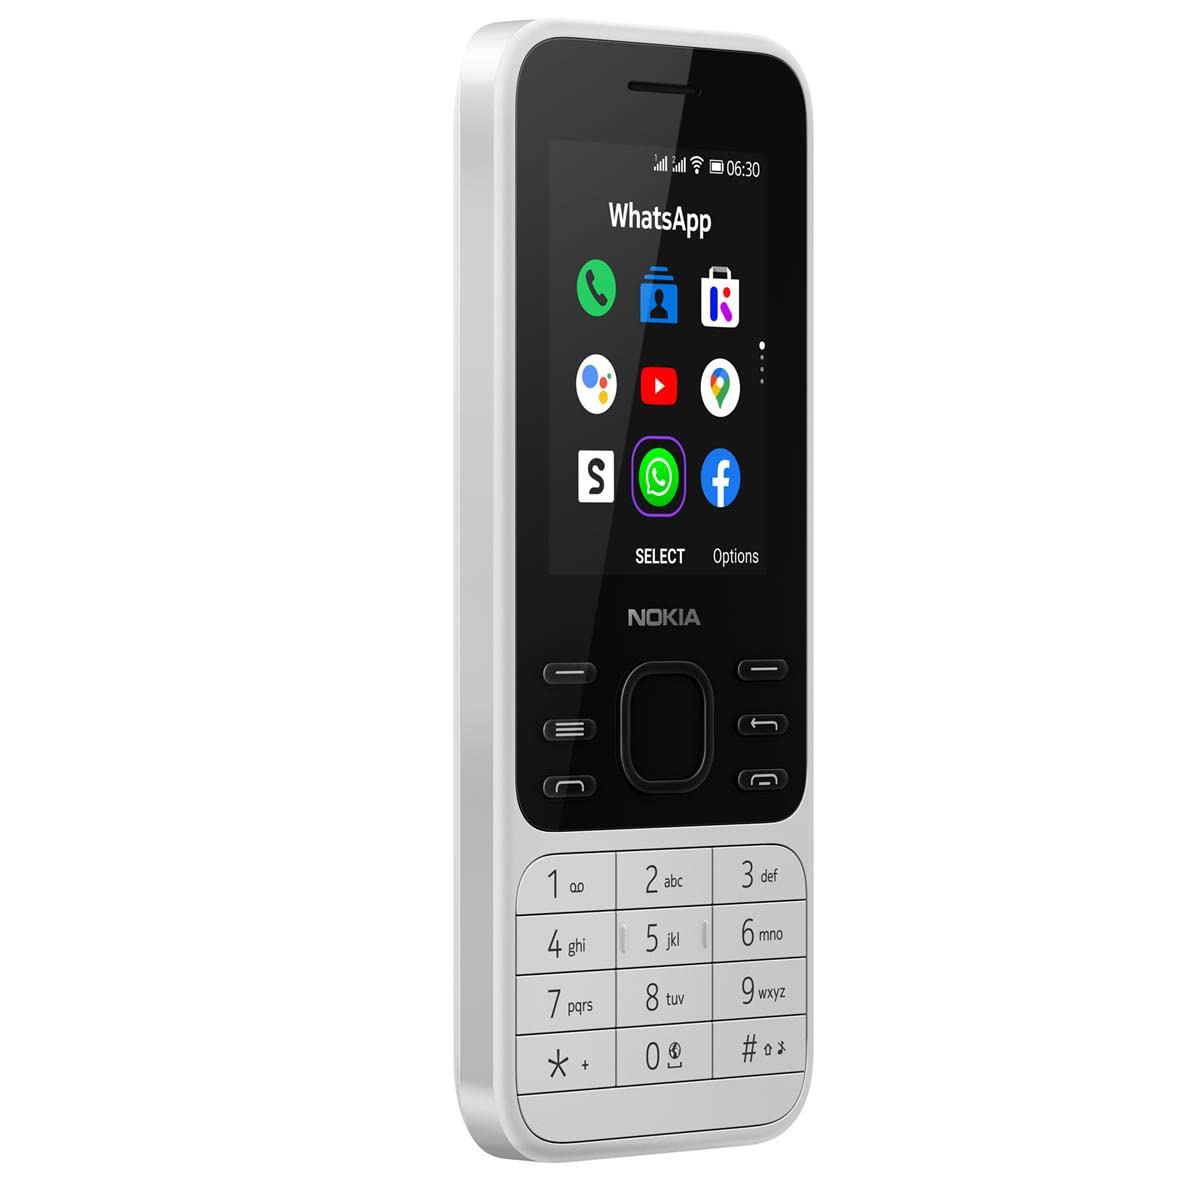 Nokia 6300 4G | Unlocked | Dual SIM | WiFi Hotspot | Social Apps | Google Maps and Assistant | Powder White